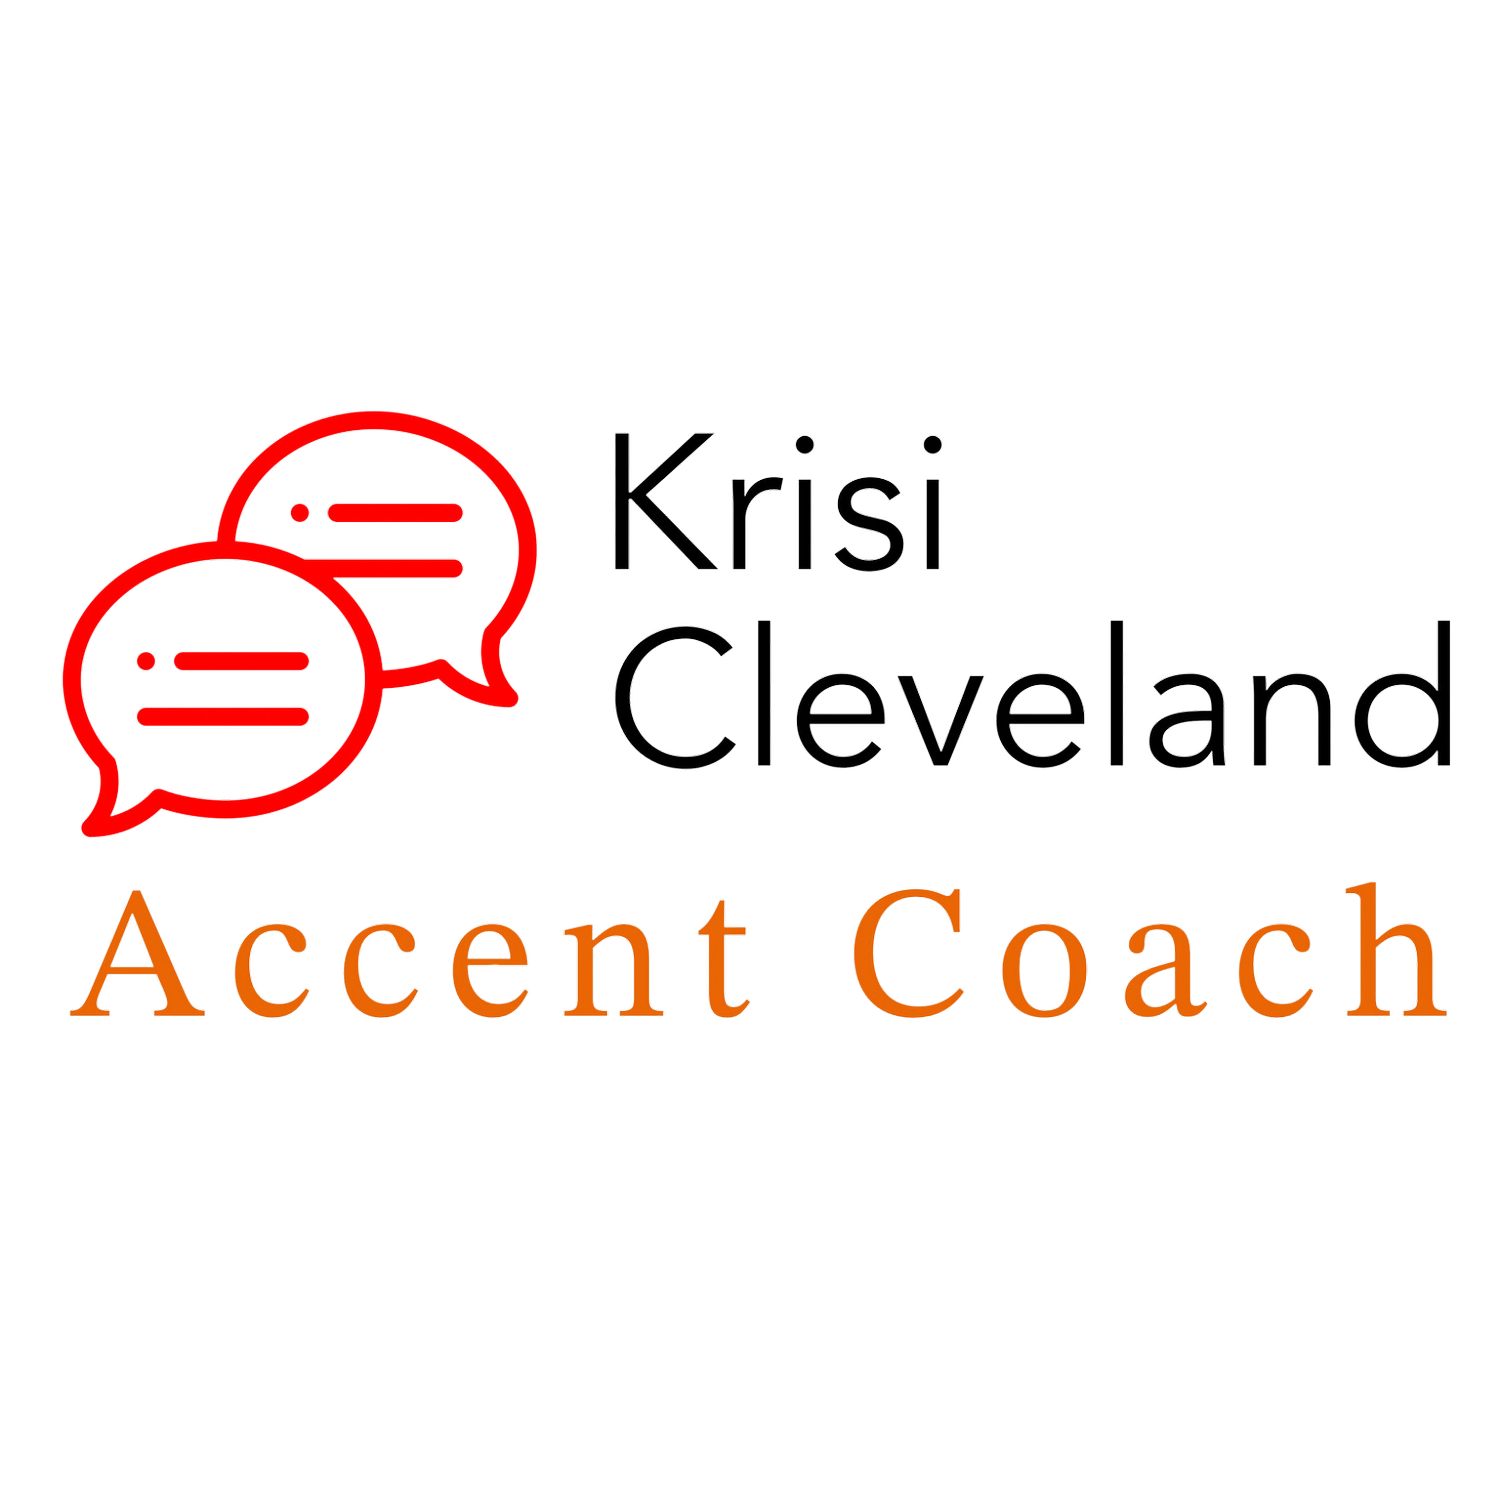 Krisi Cleveland Accent Coach